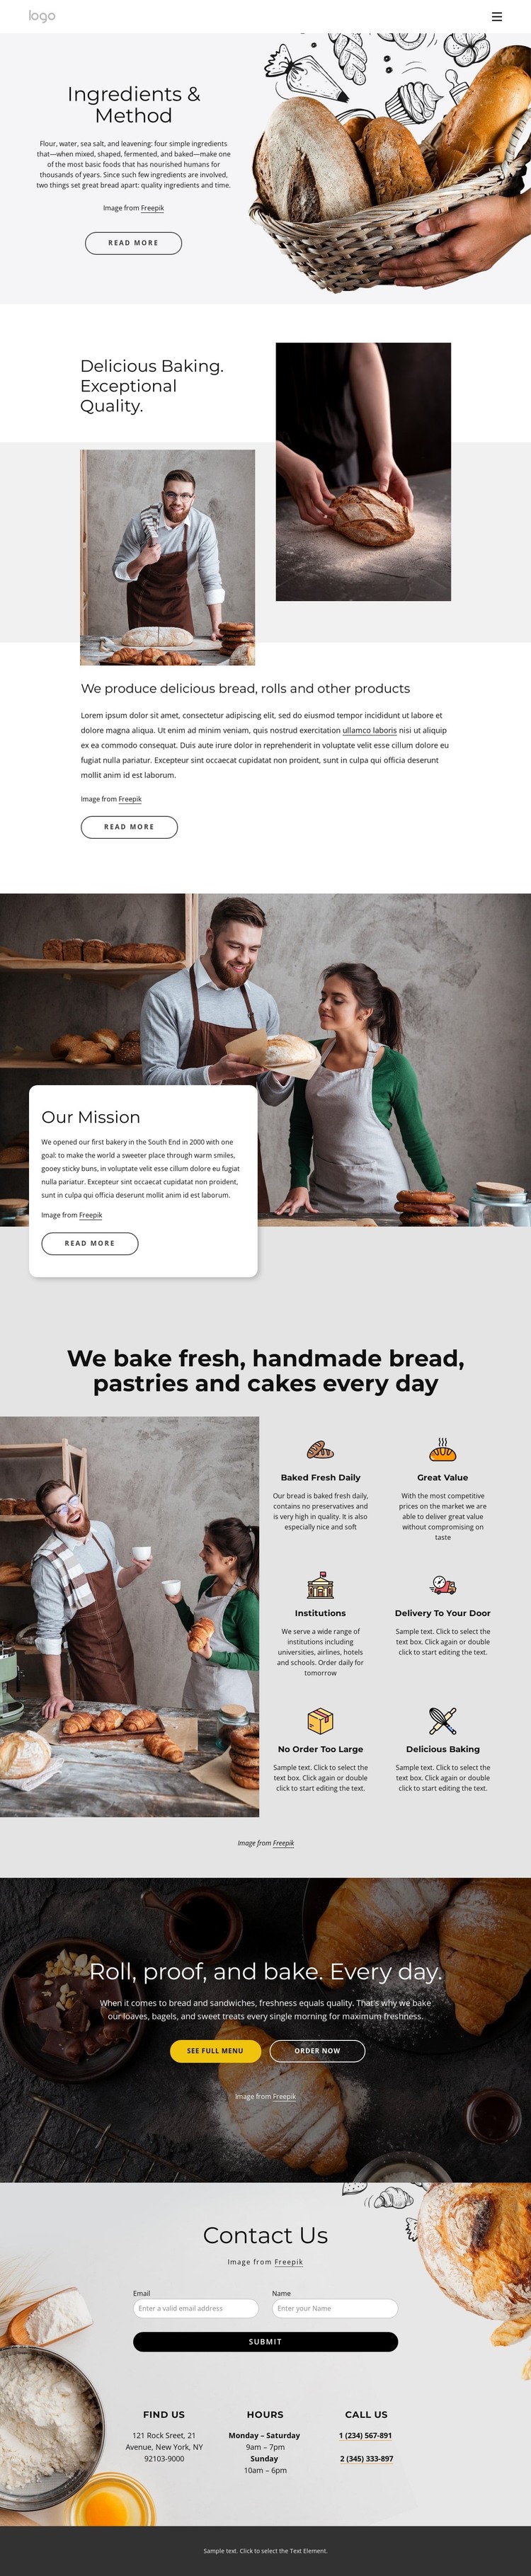 We bake handmade bread HTML Template